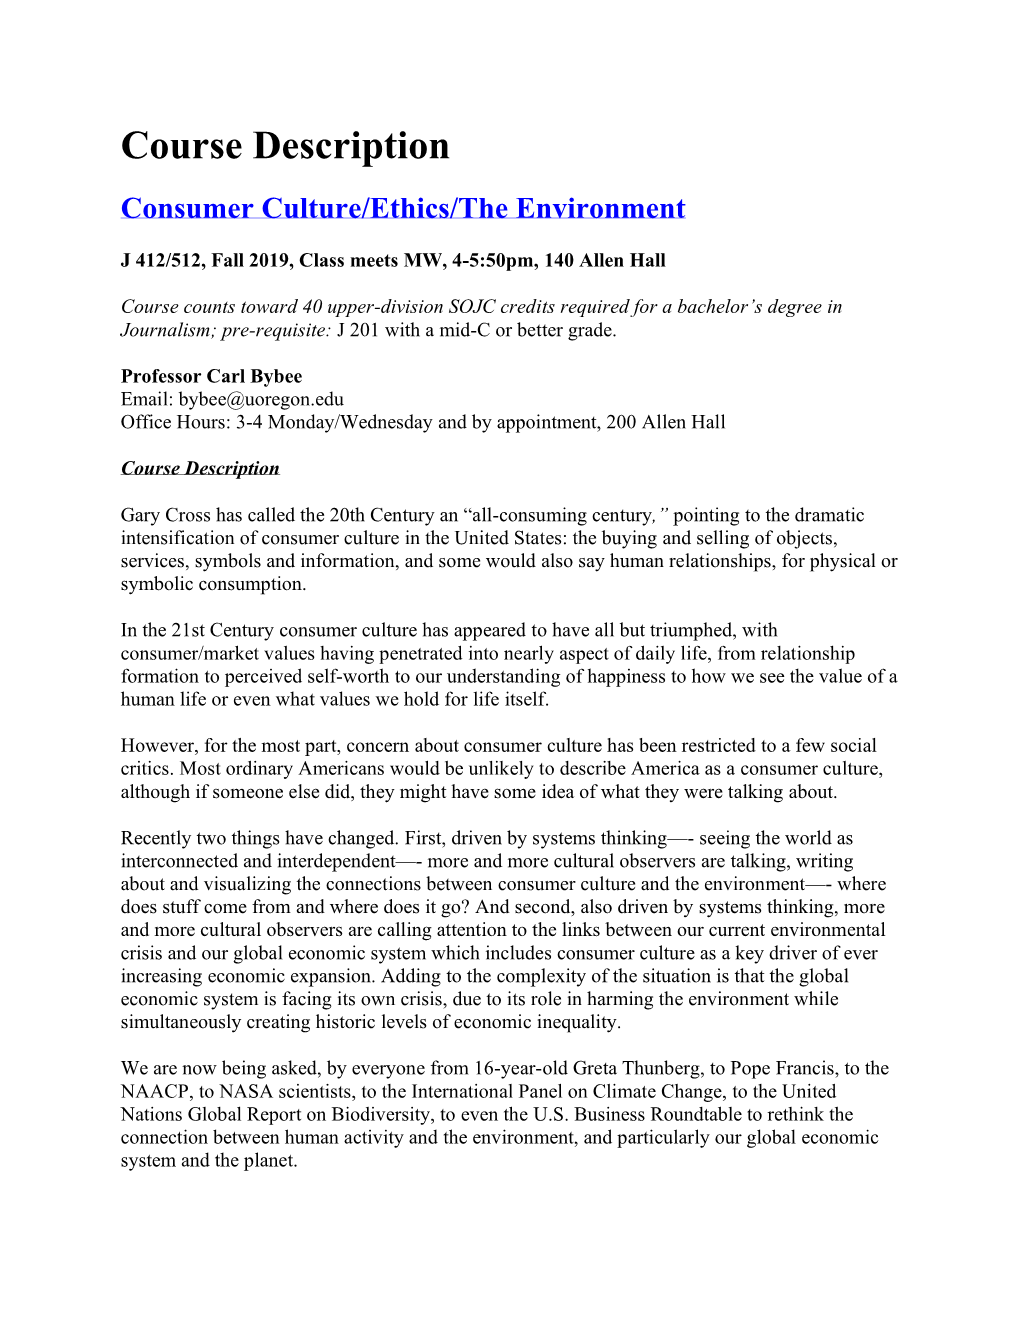 Course Description Consumer Culture/Ethics/The Environment